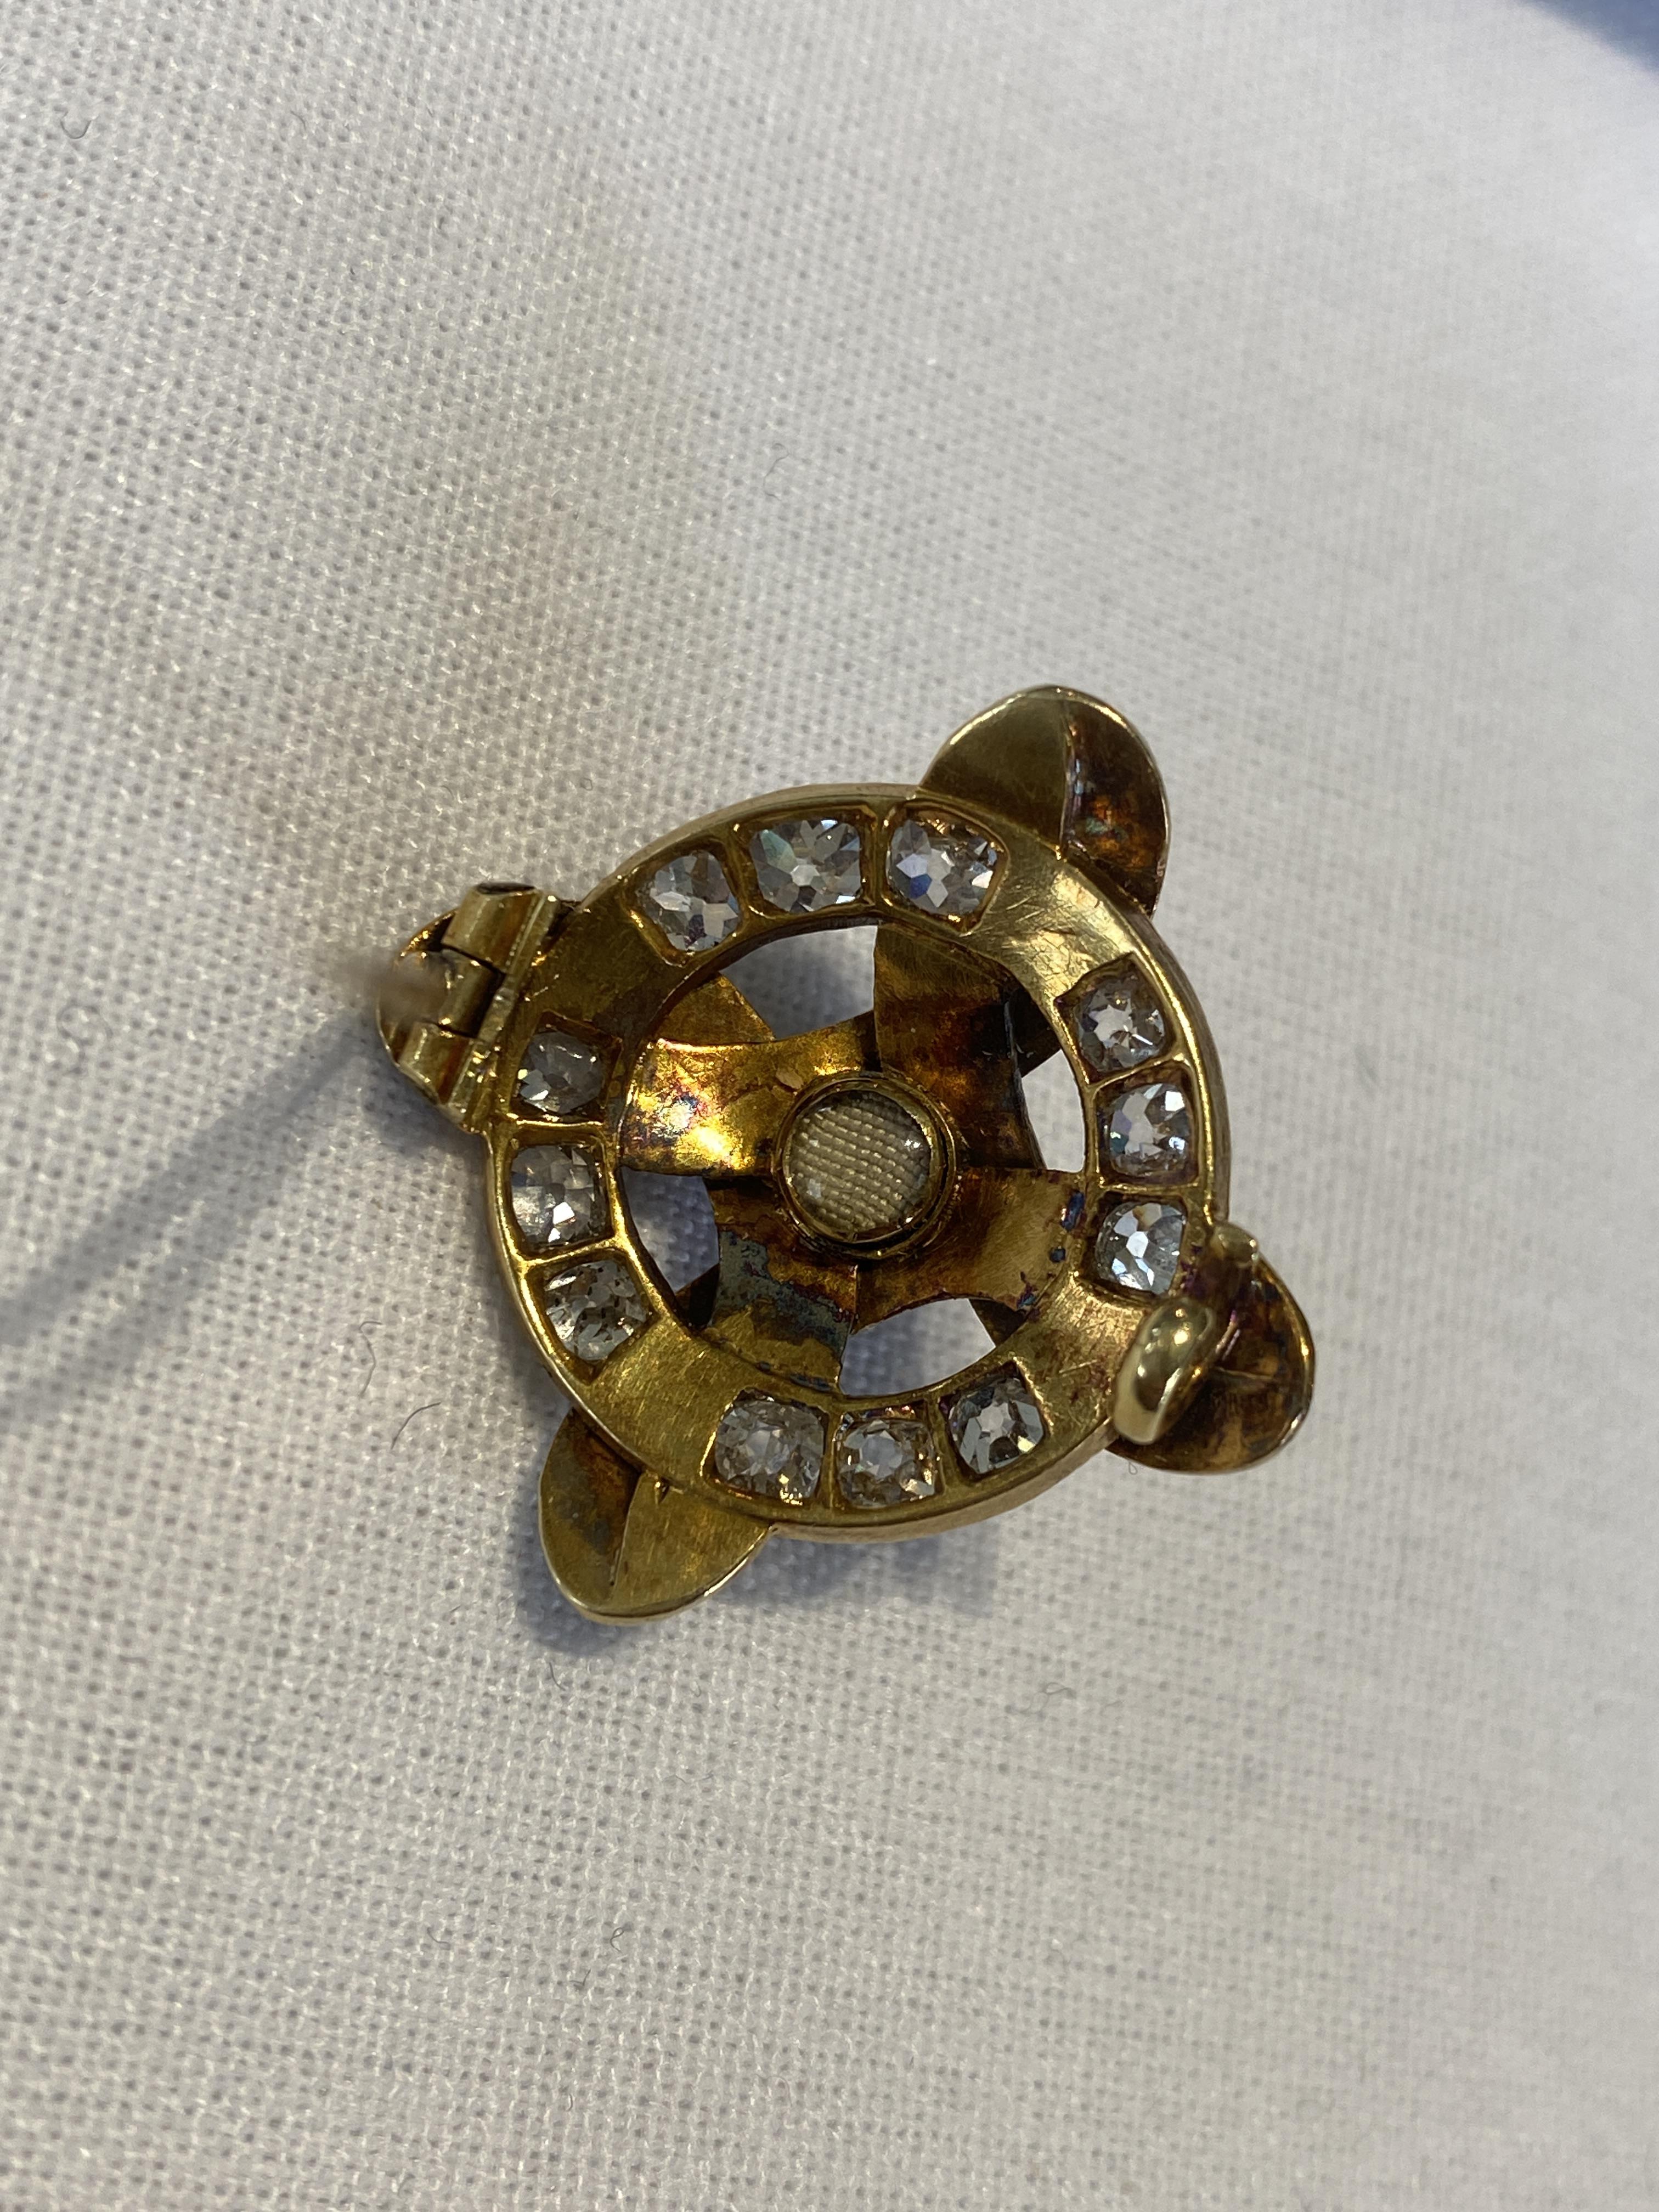 Diamond and enamel brooch - Image 3 of 4